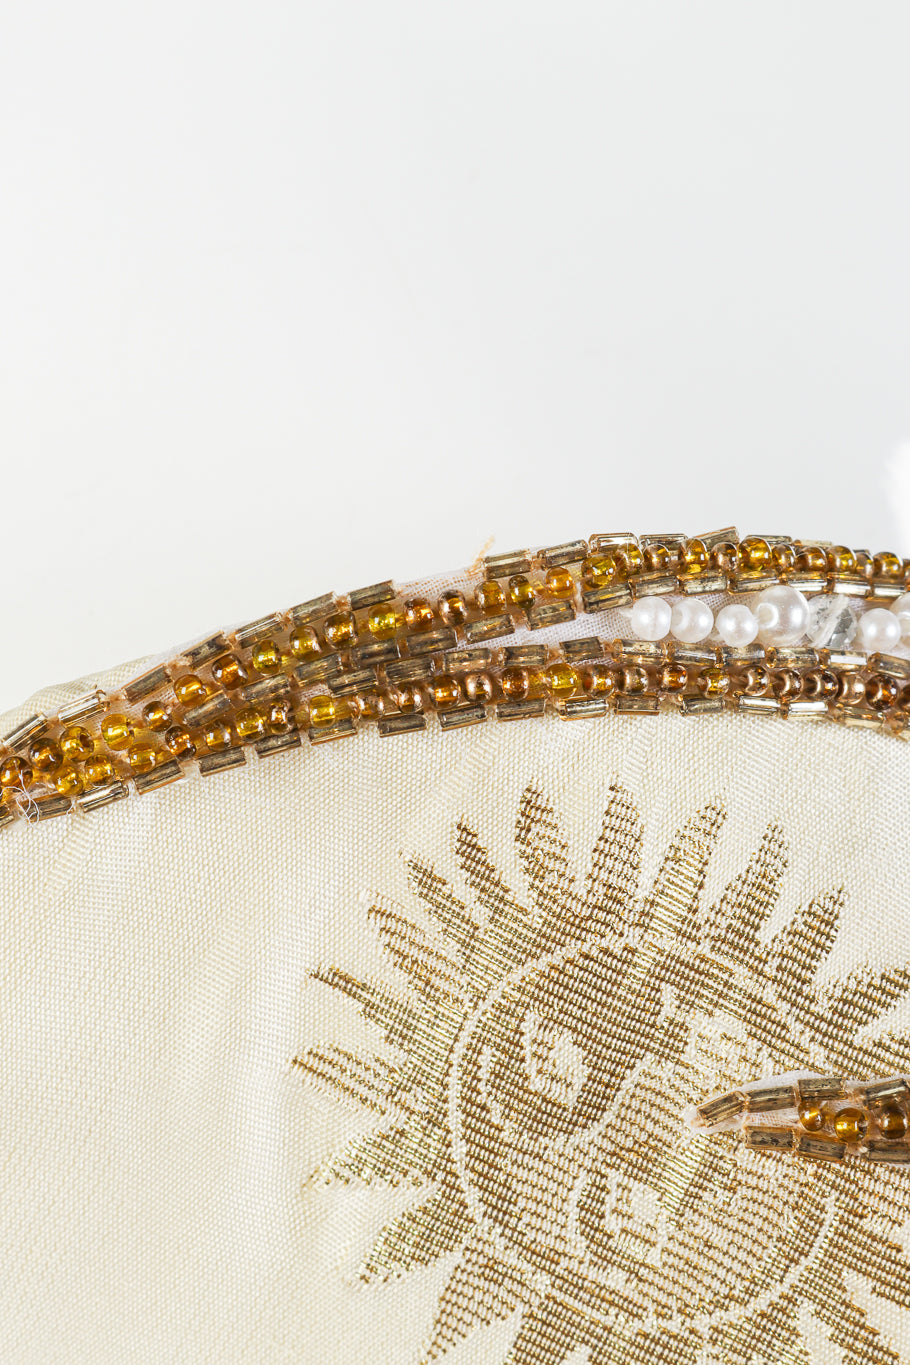 Vintage Bob Mackie Sunburst Strapless Gown missing beads @recessla